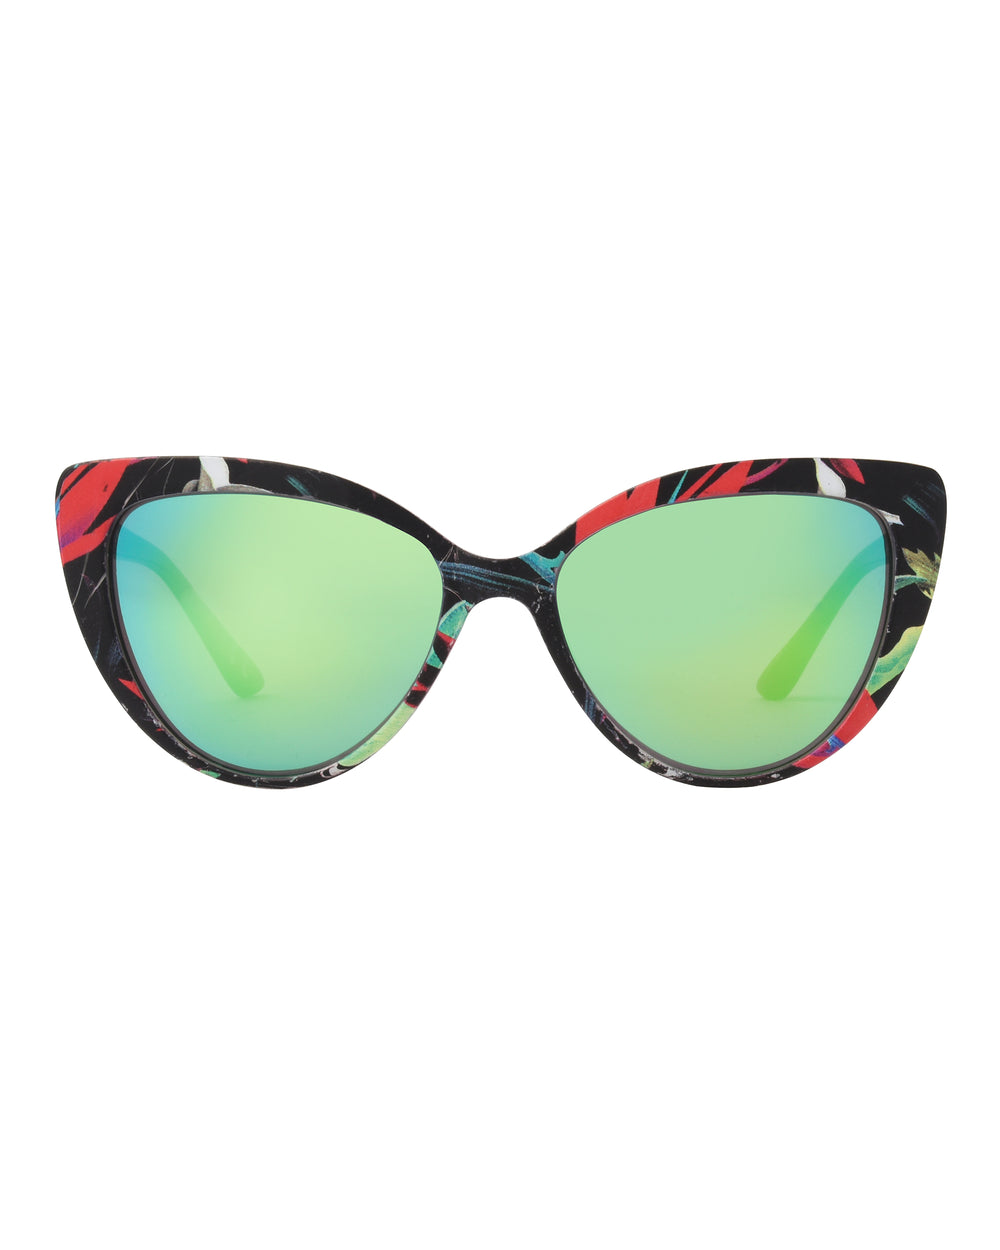 Wavy Cateye Sunglasses - Wild Fable™ Black : Target